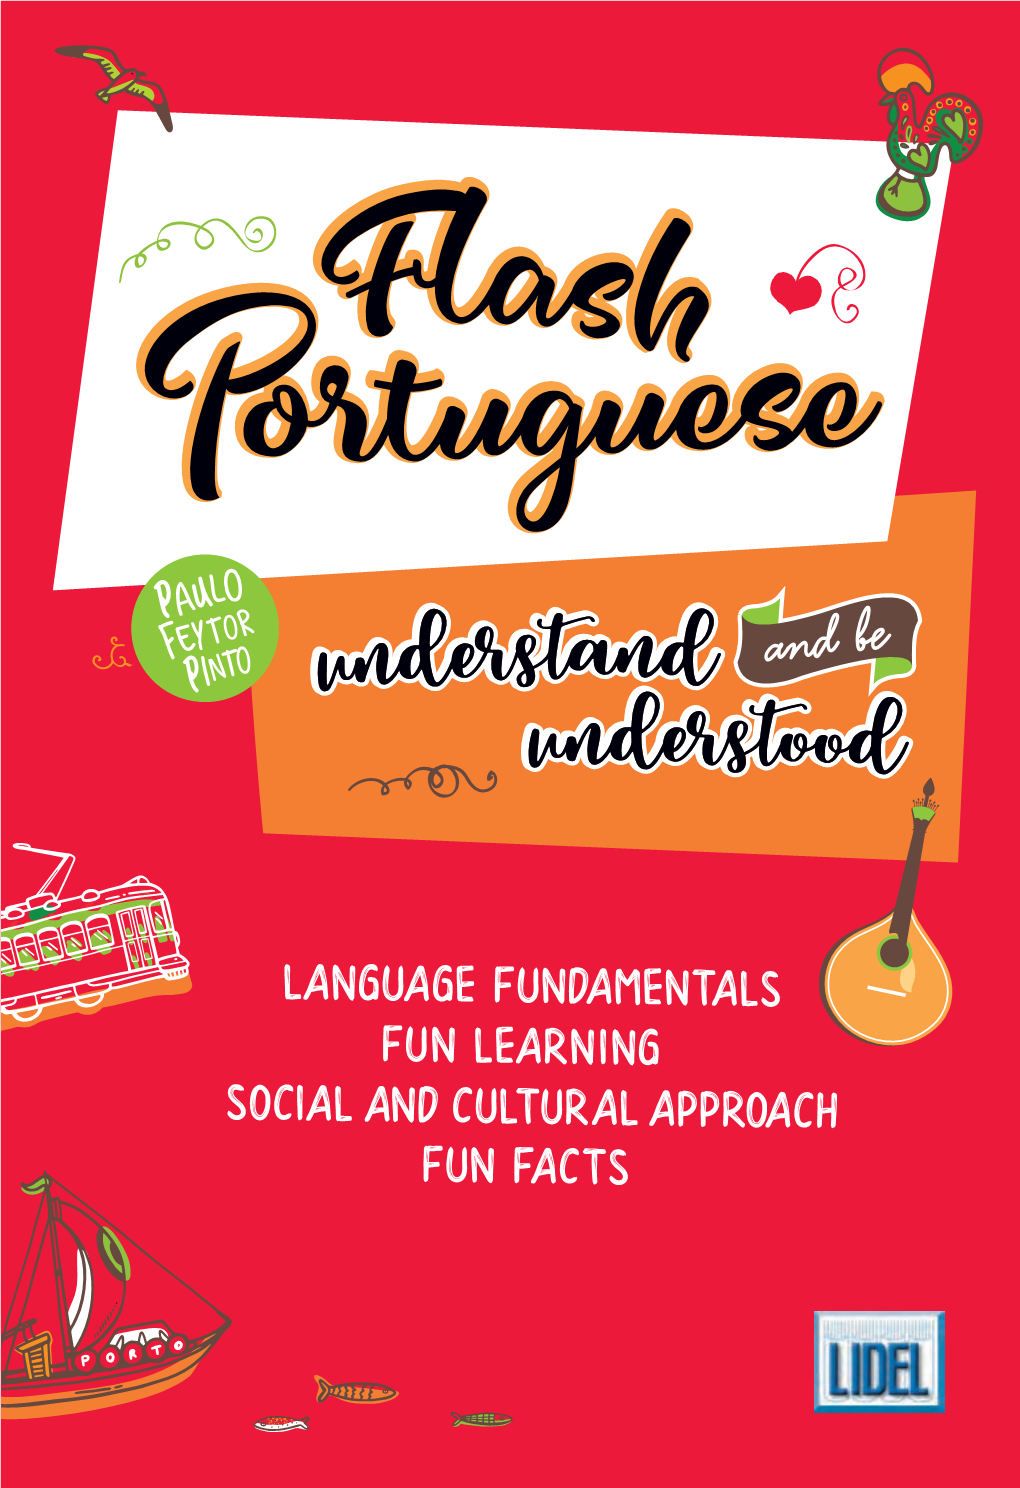 Language Fundamentals Fun Learning Fun Facts Social and Cultural